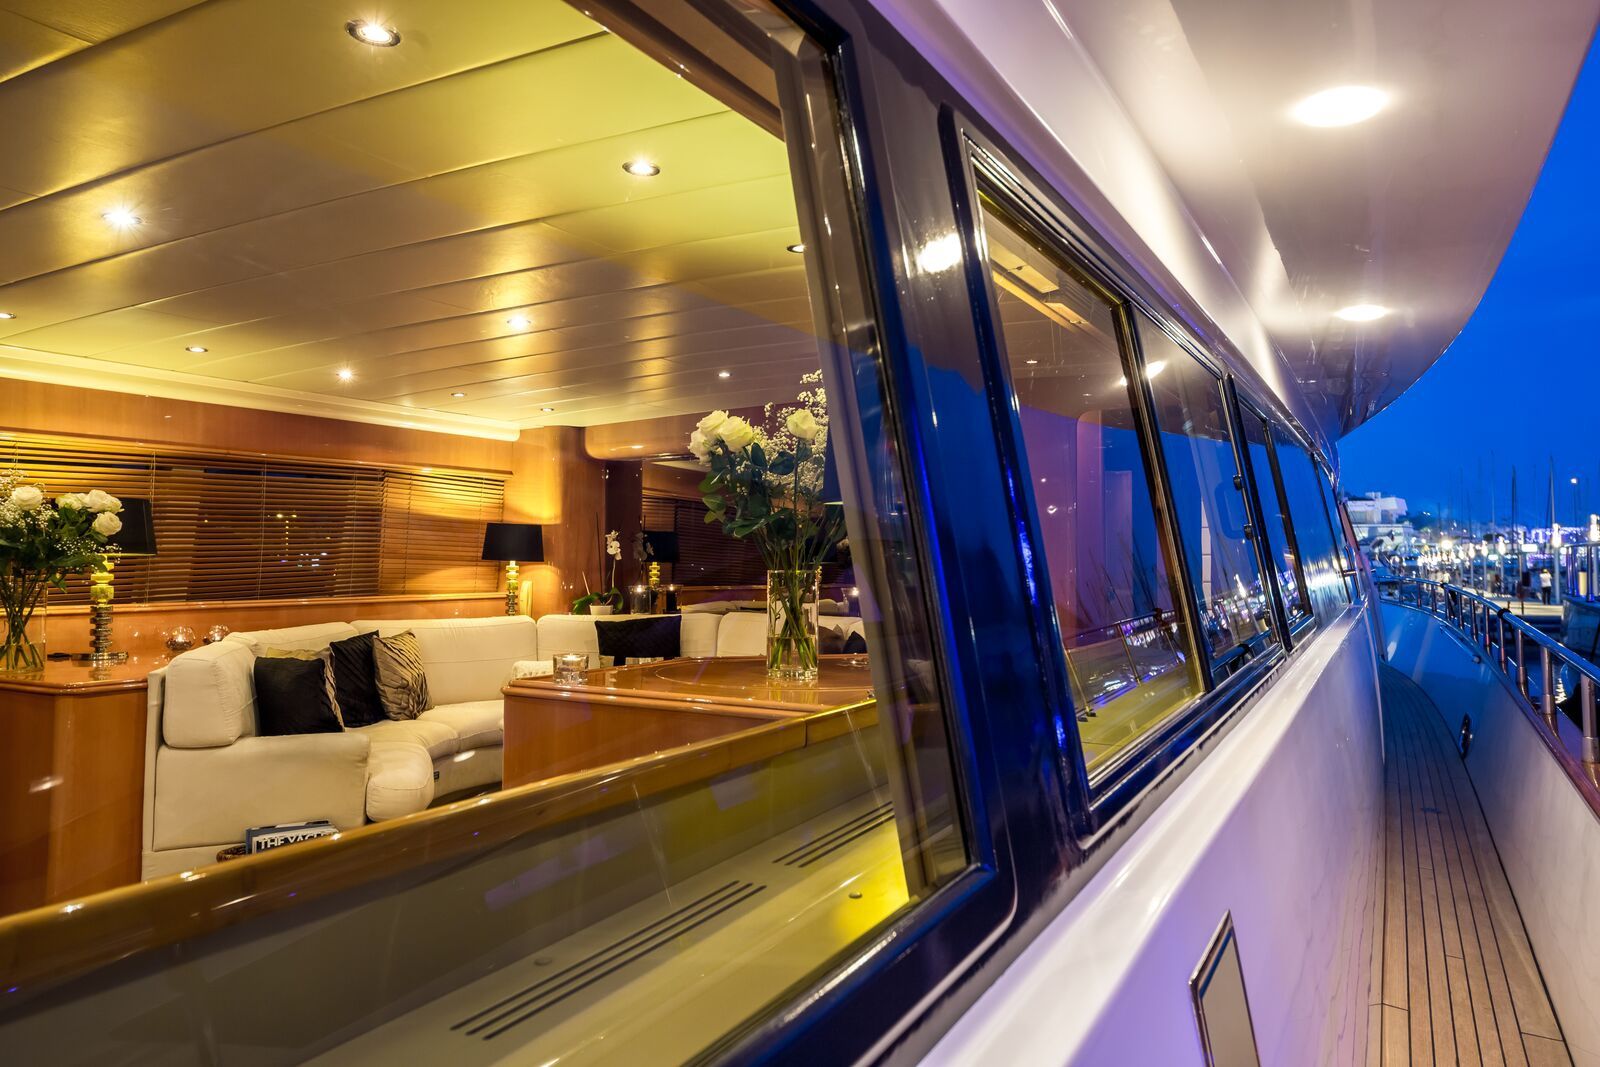 INDULGENCE OF POOLE Mangusta 86 Luxury Superyacht Walkway